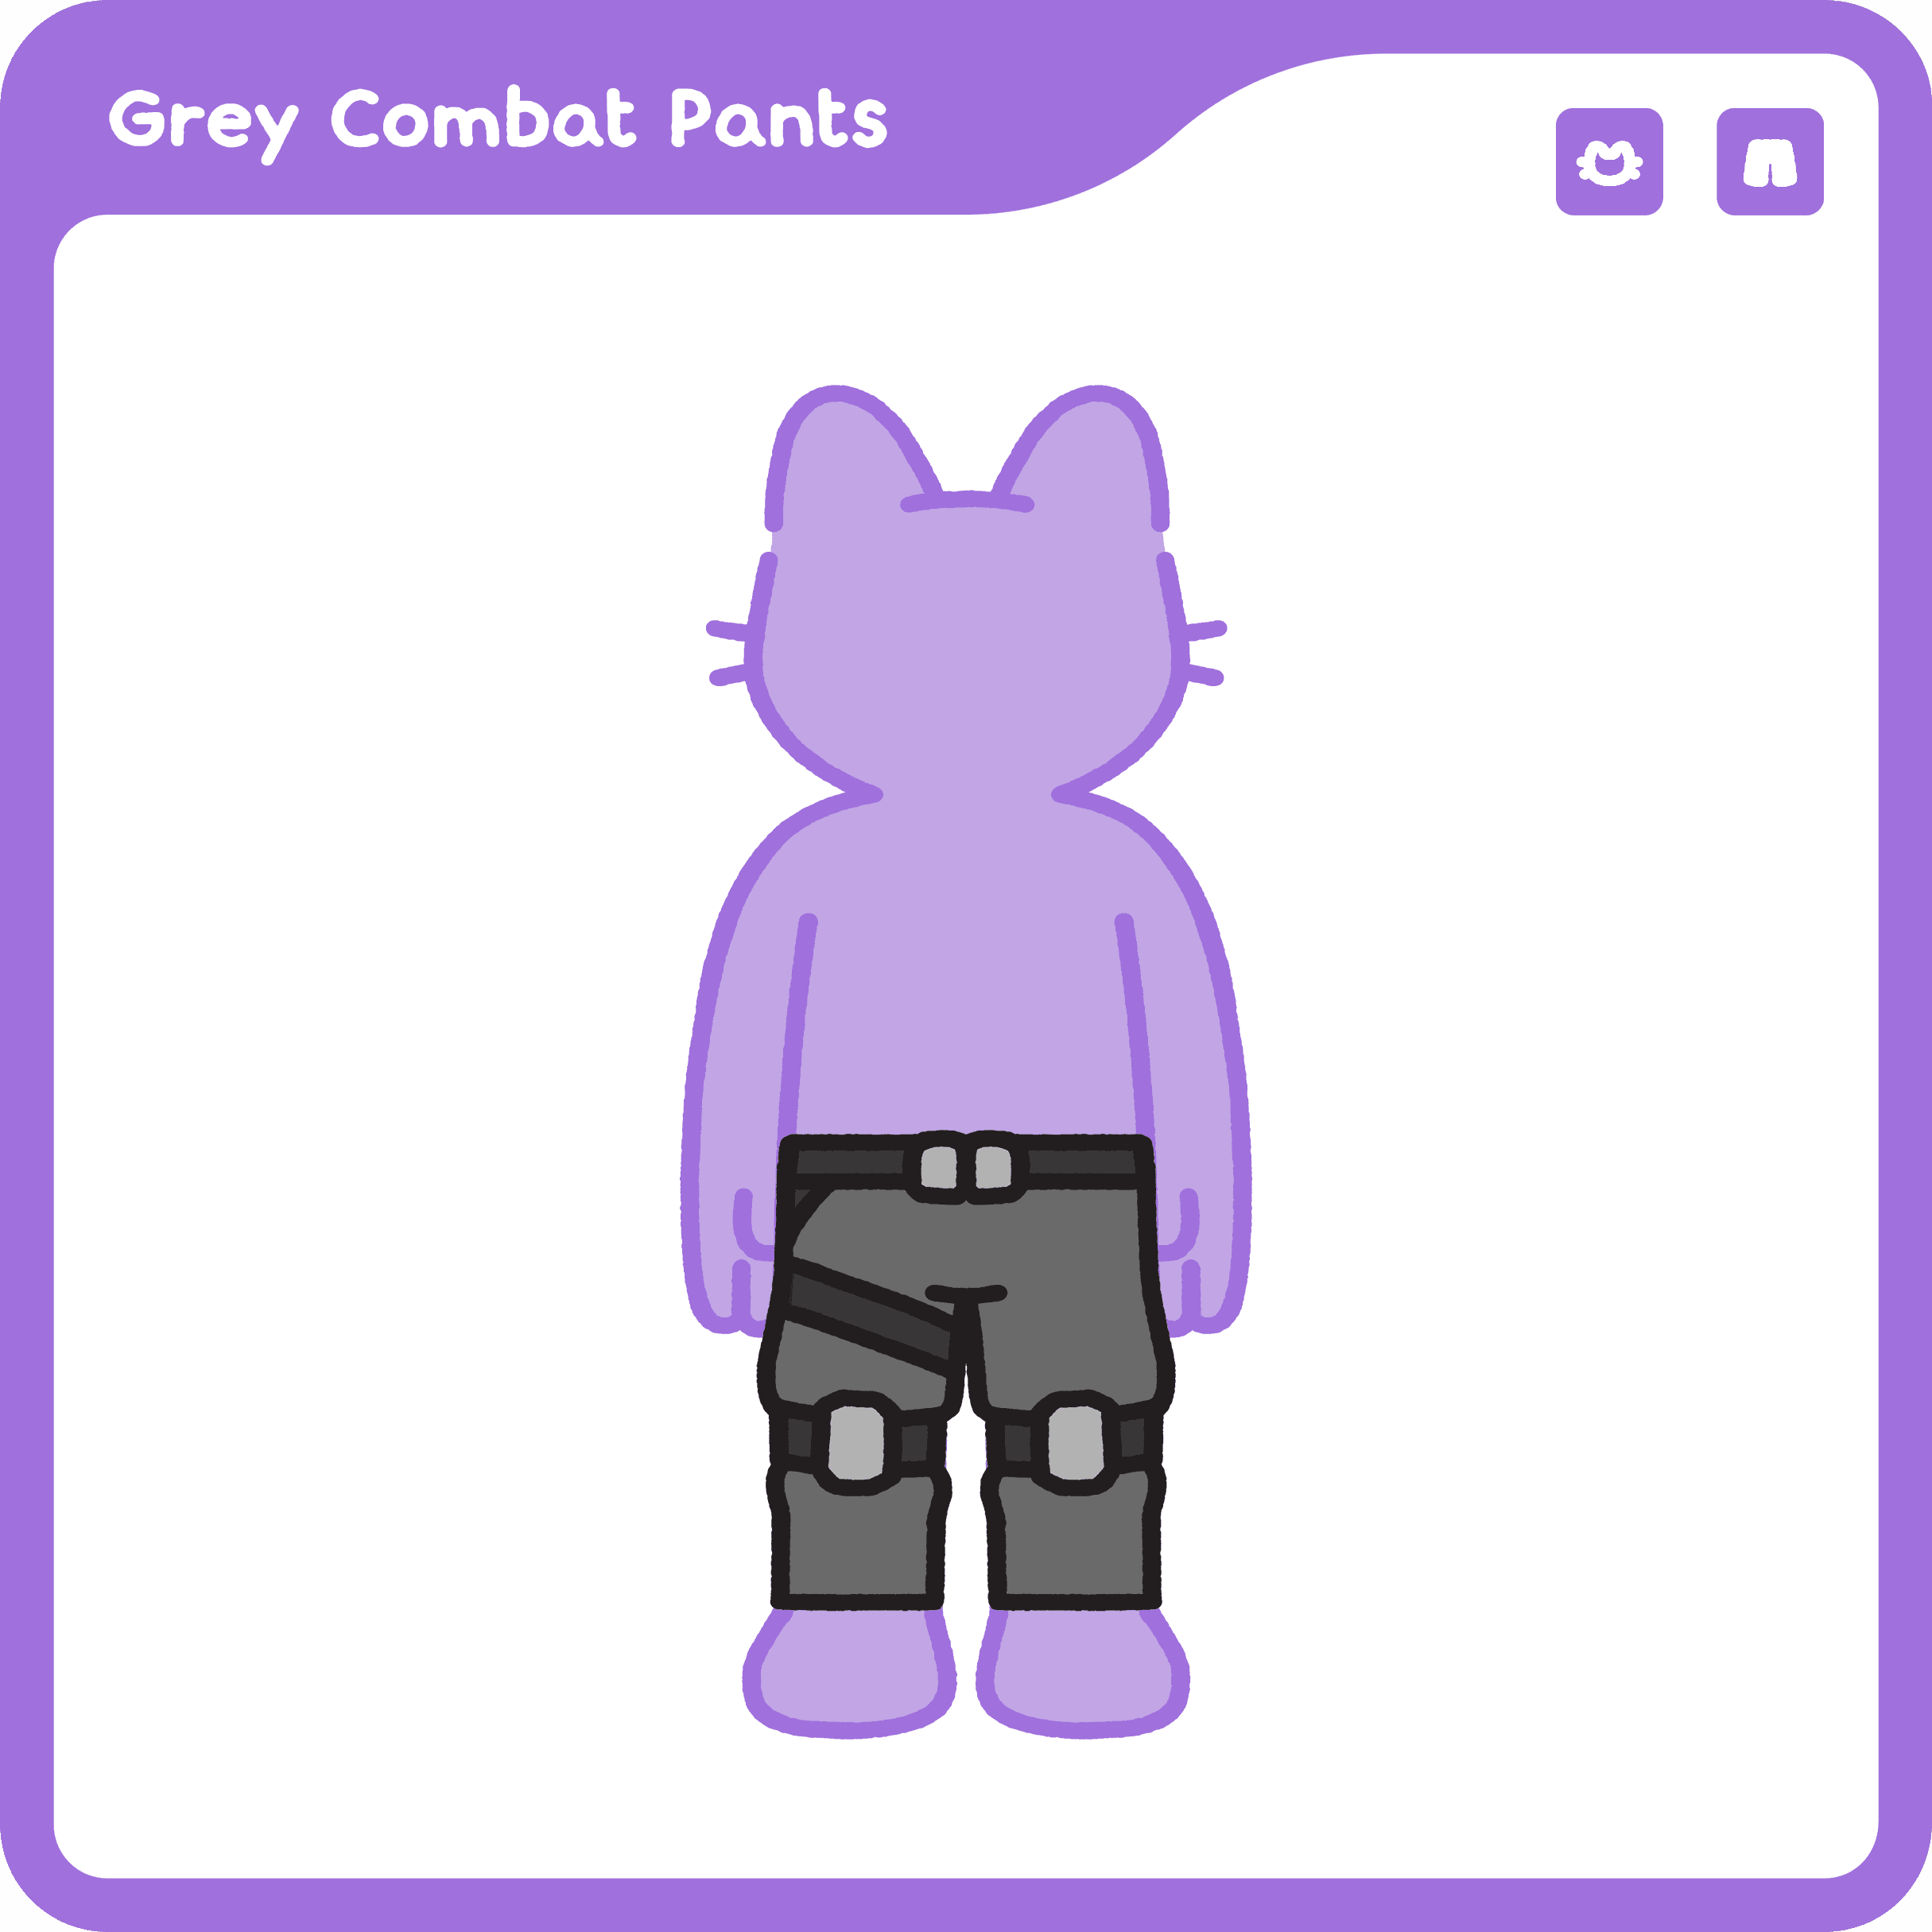 Grey Combat Pants